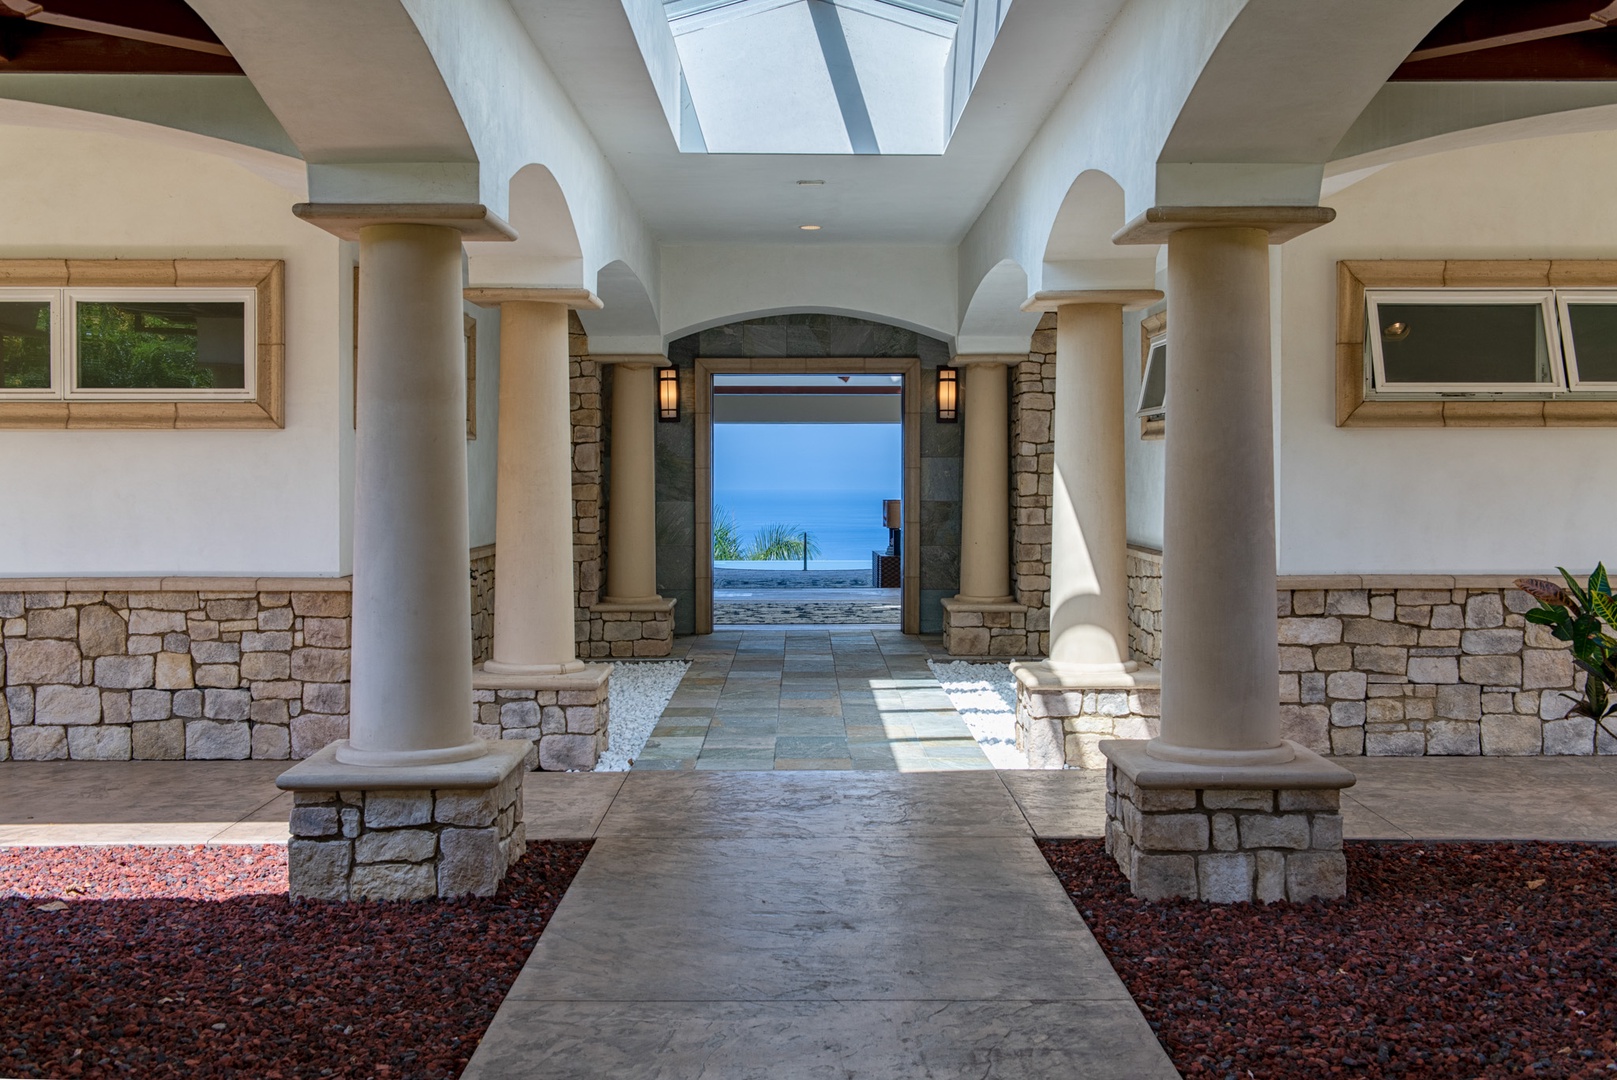 Kailua Kona Vacation Rentals, Kailua Kona Estate** - Walk down this hallway towards the pool and ocean views.